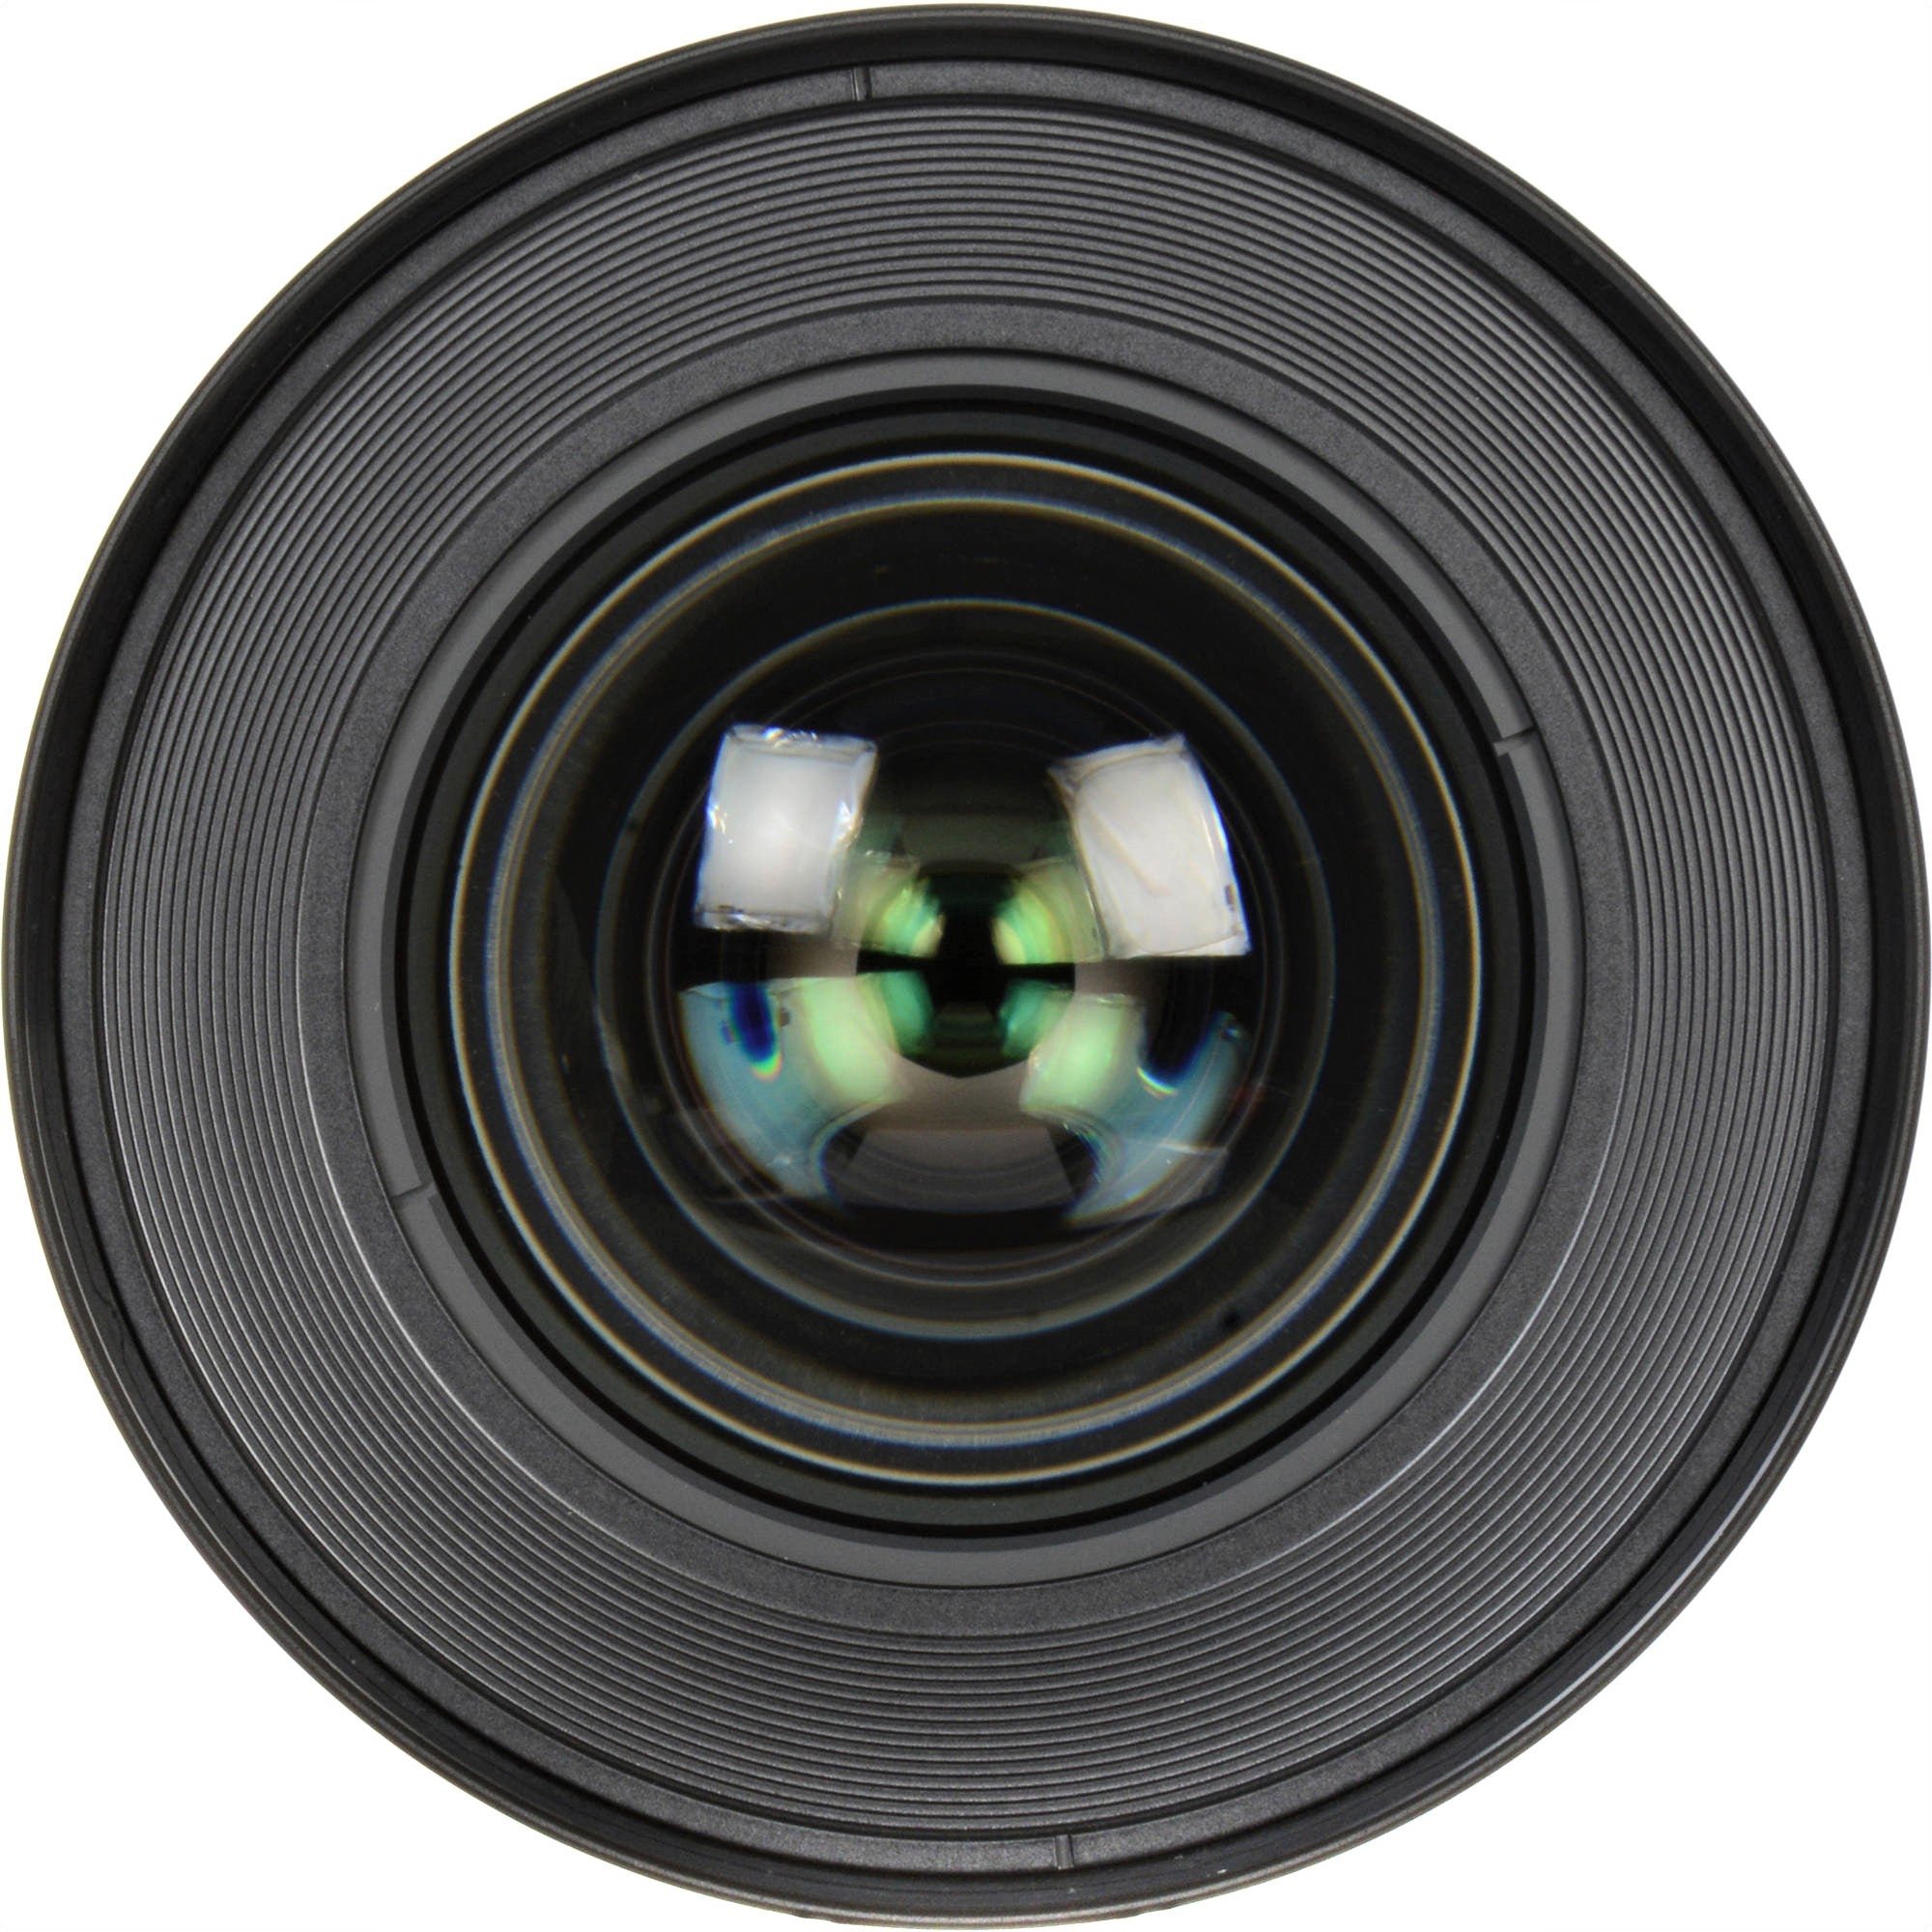 Tokina 35mm T1.5 Cinema Vista Prime Lens (PL Mount) in a Front Close-Up View